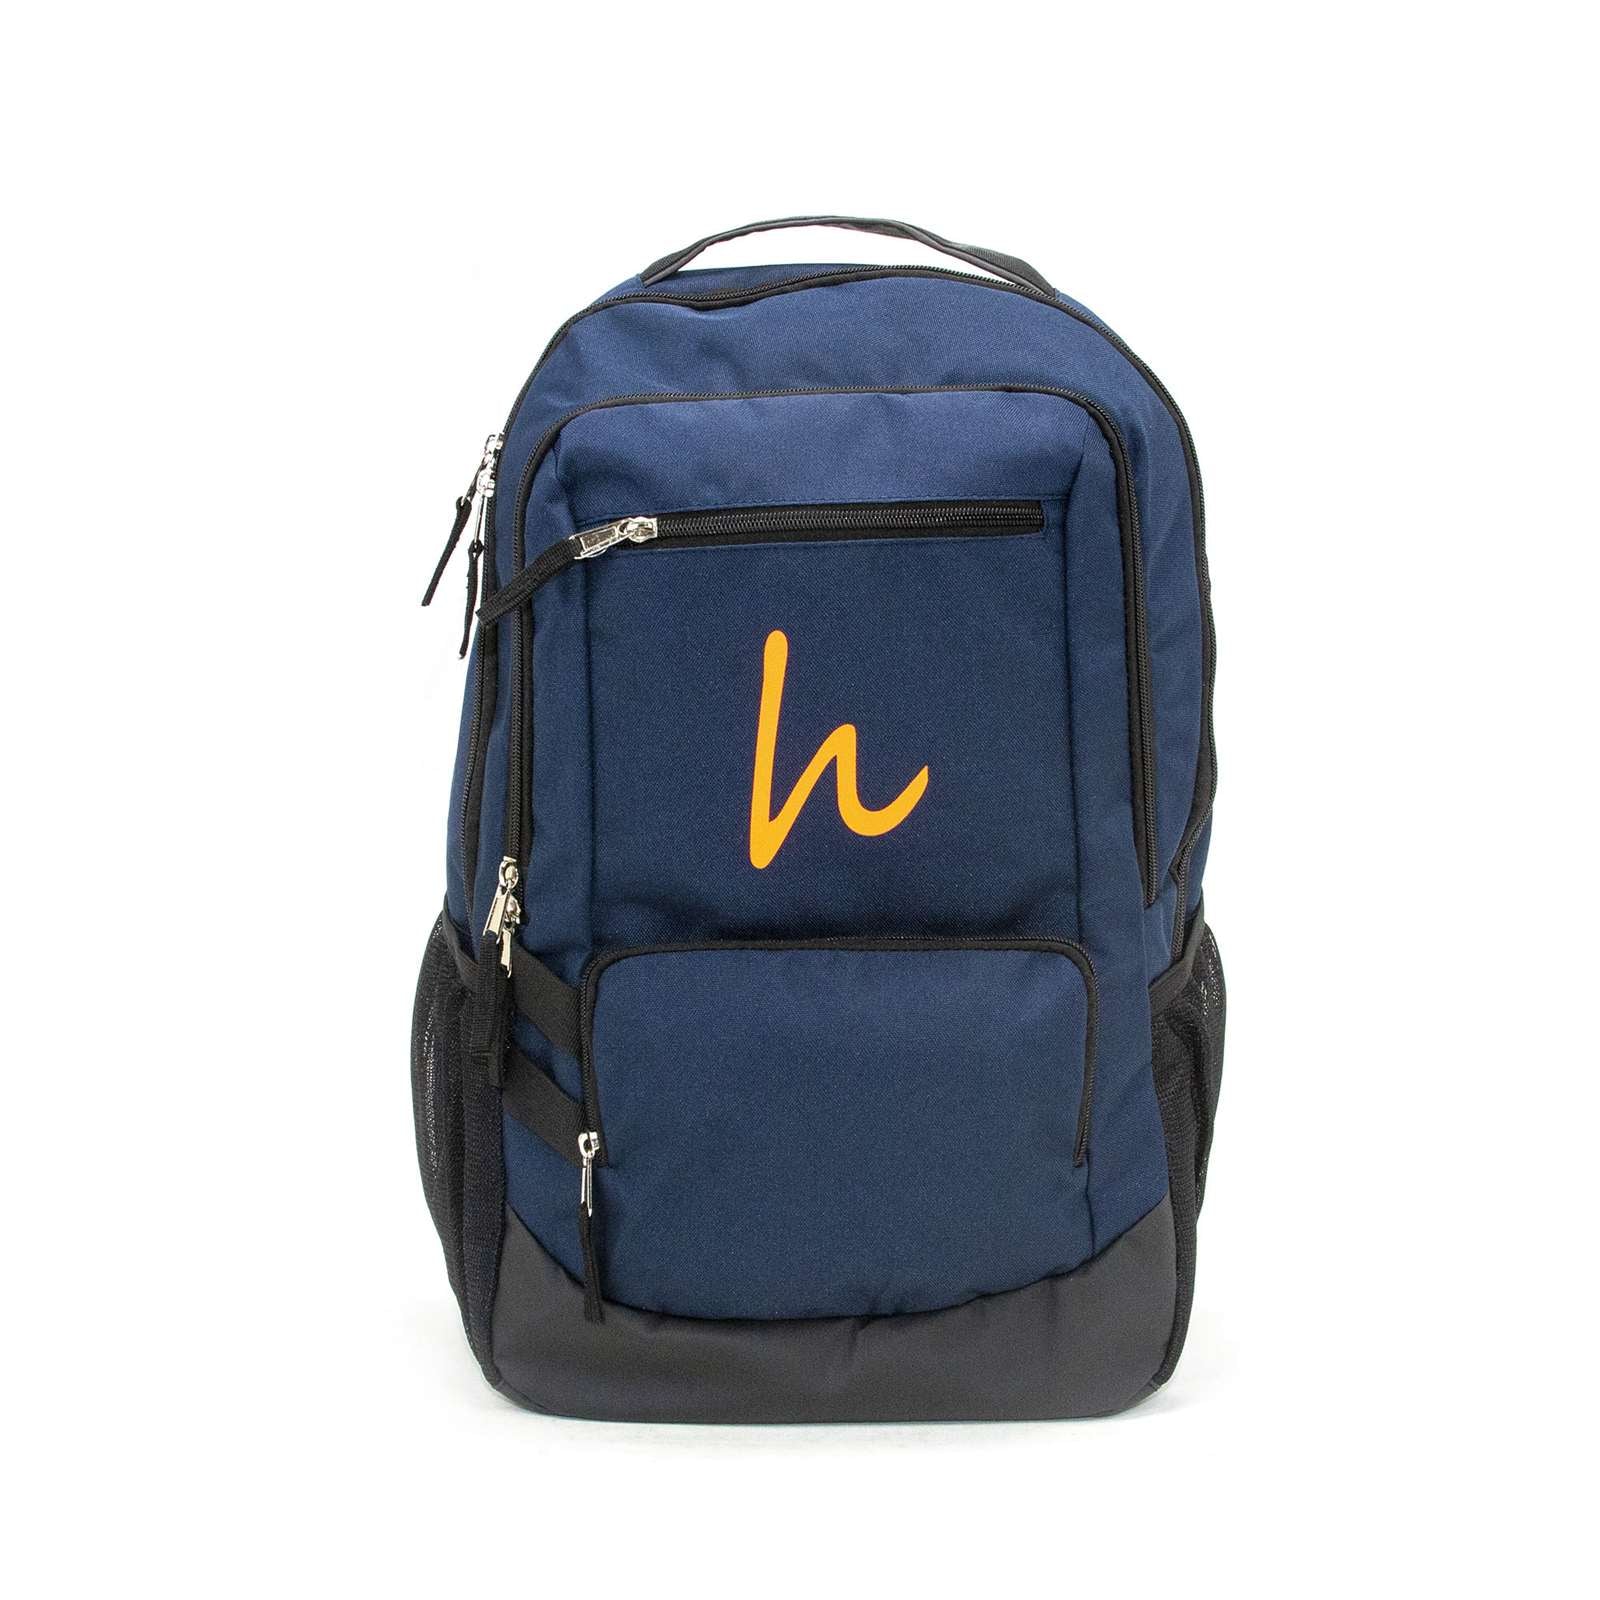 Hakki Men Carry-All Travel Everyday Laptop Backpack